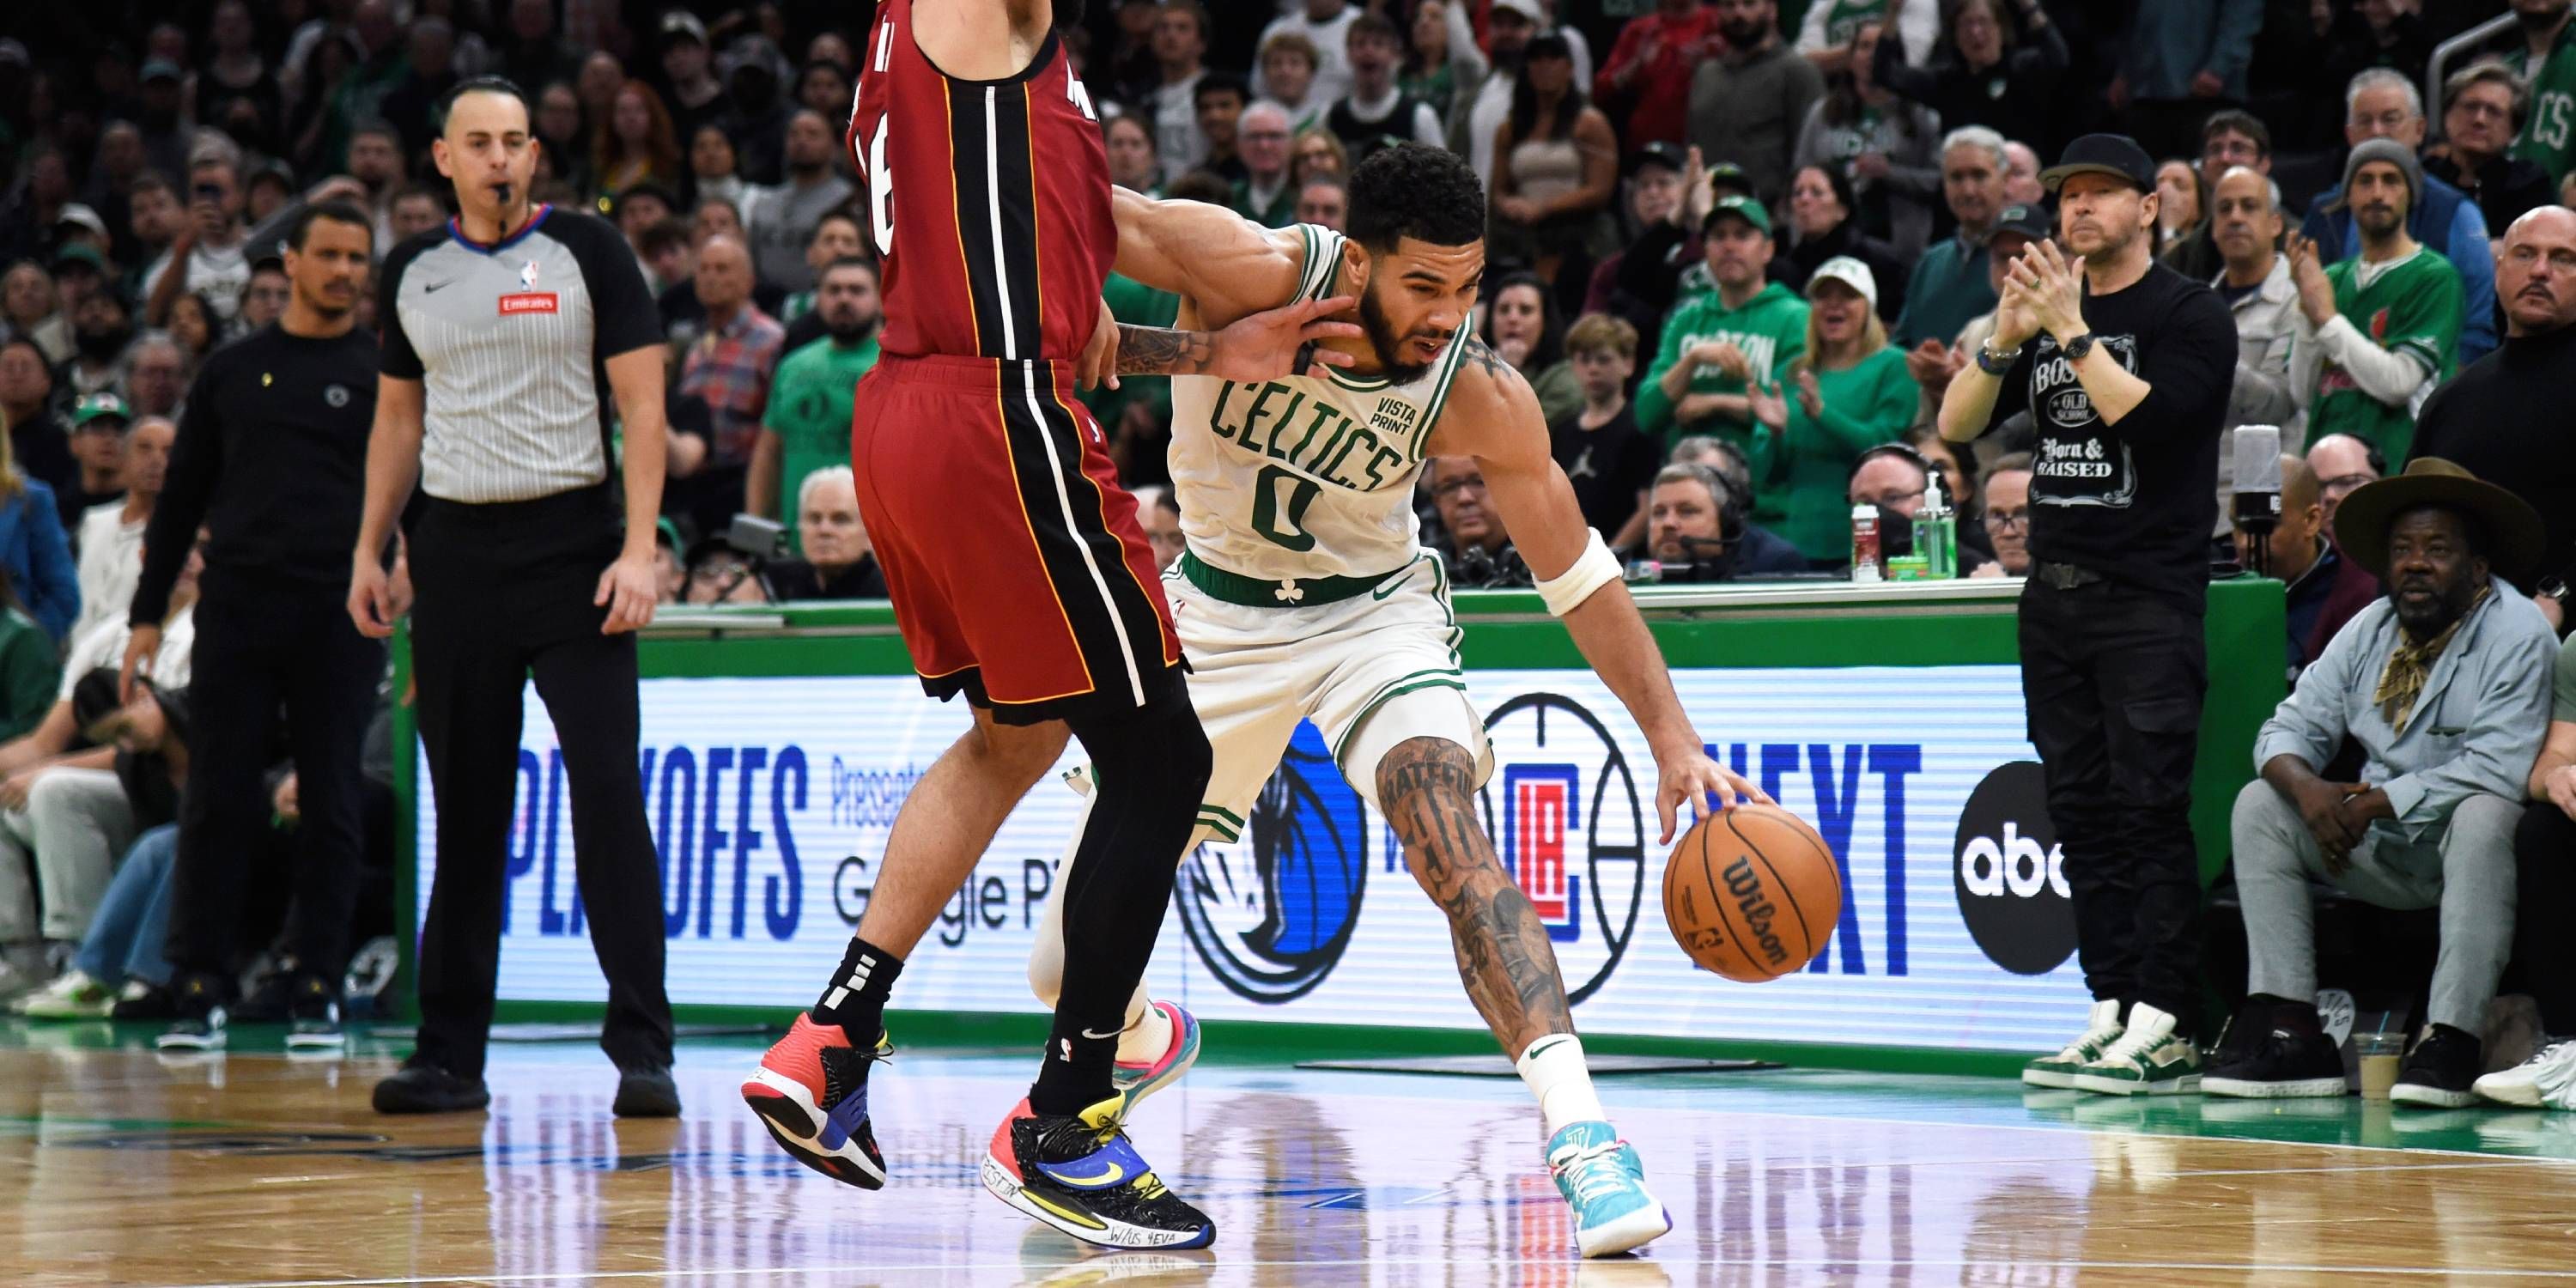 Jayson Tatum makes a play against the Miami Heat.